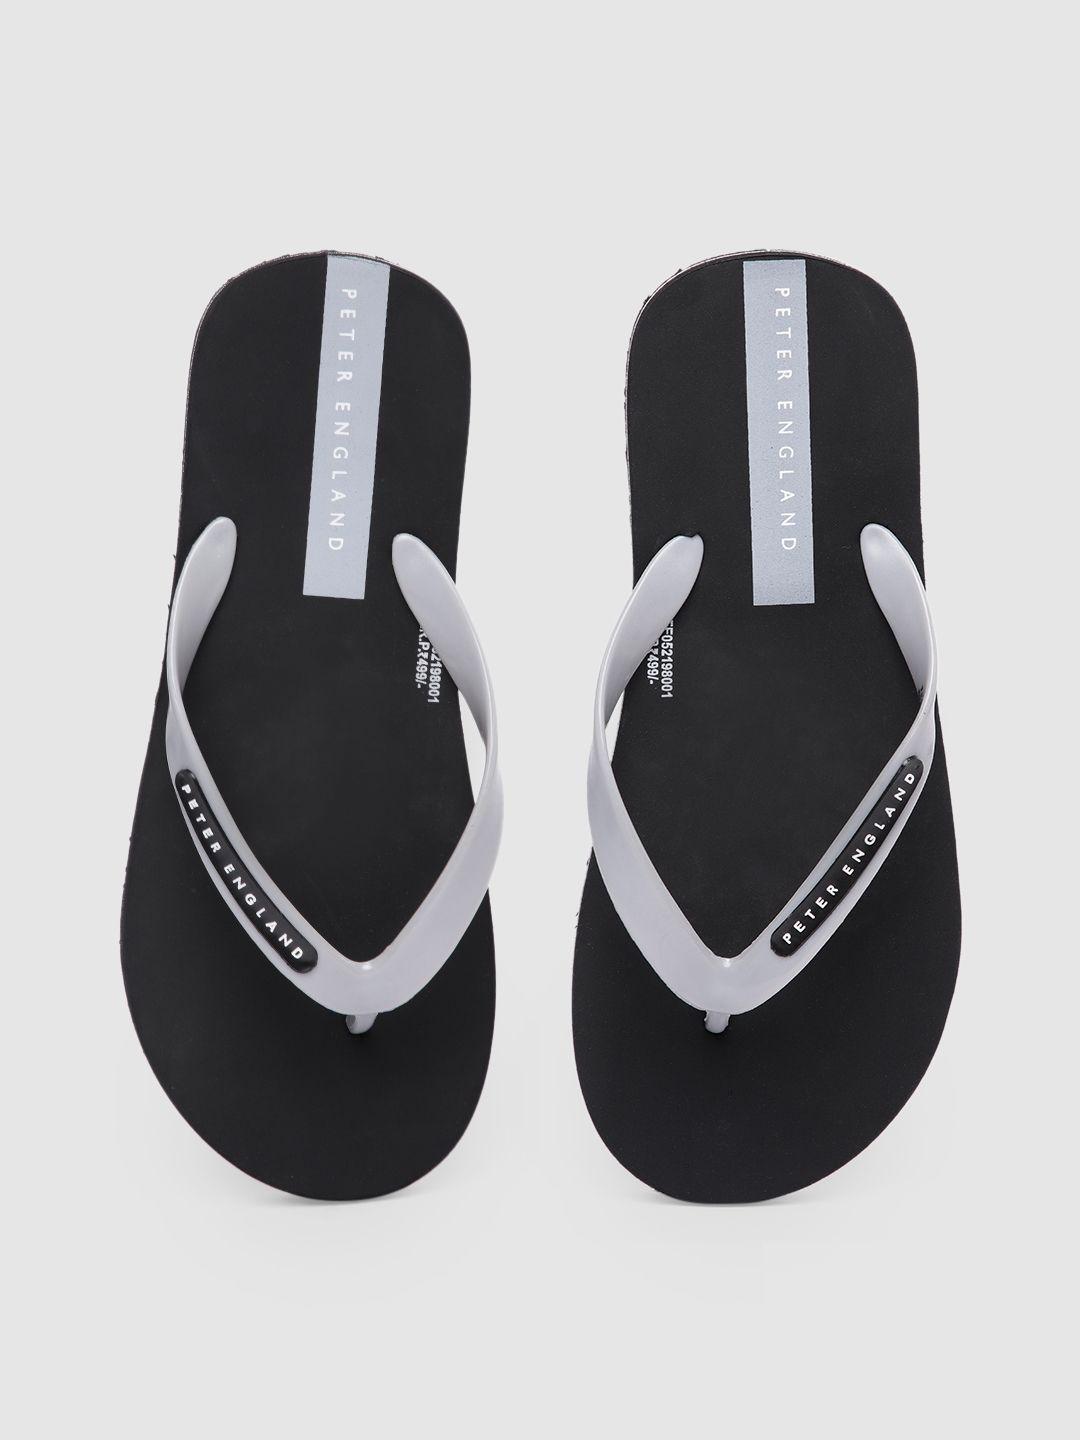 peter england men black & grey solid rubber thong flip-flops with brand logo printed